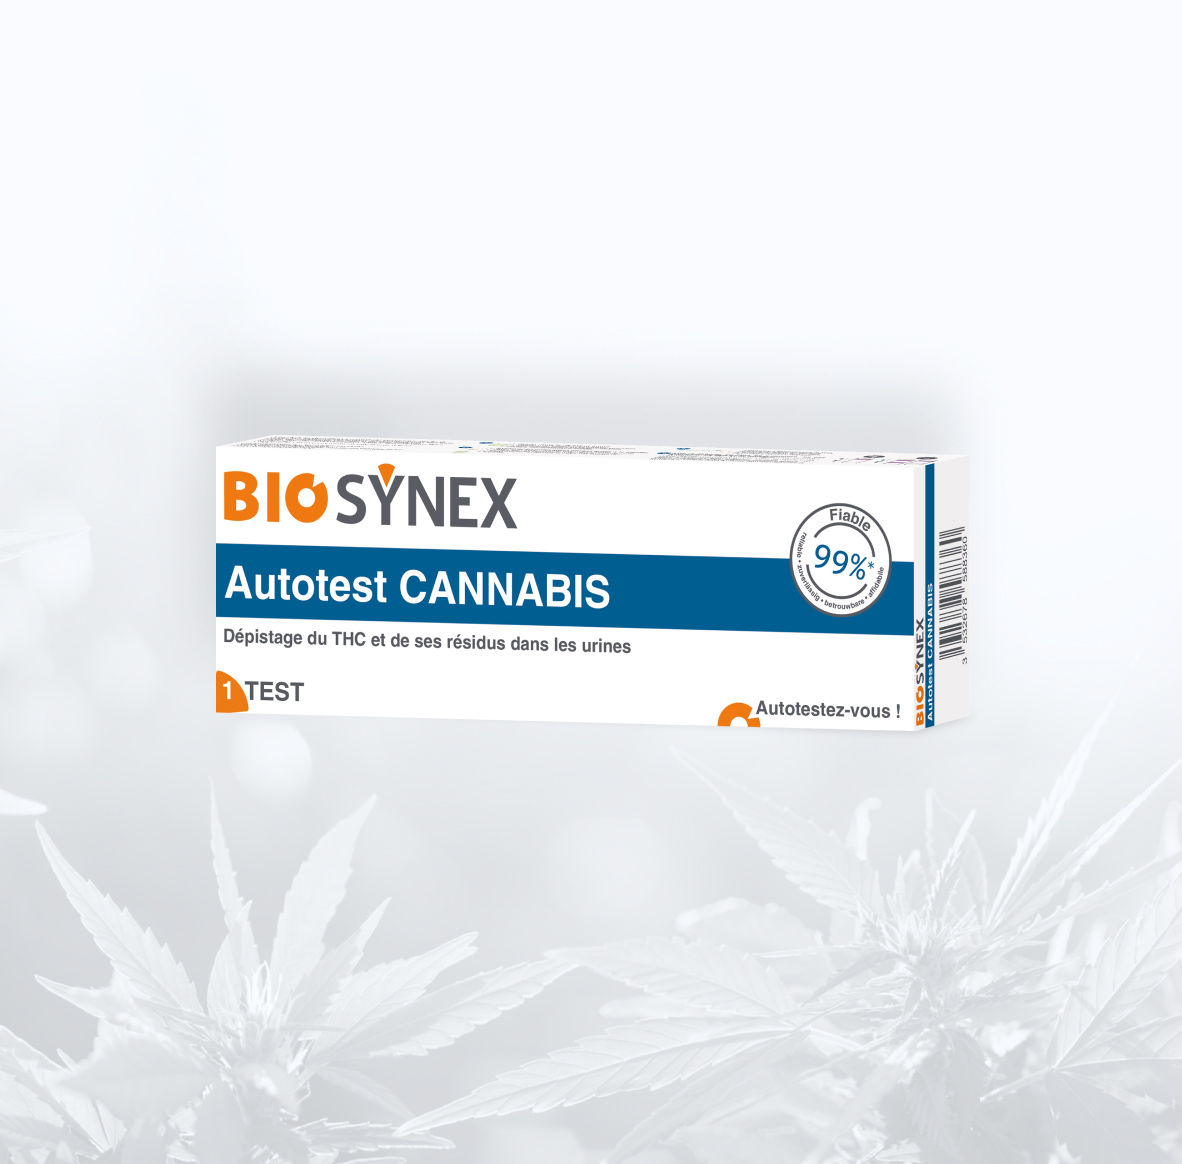 Autotest cannabis – Biosynex